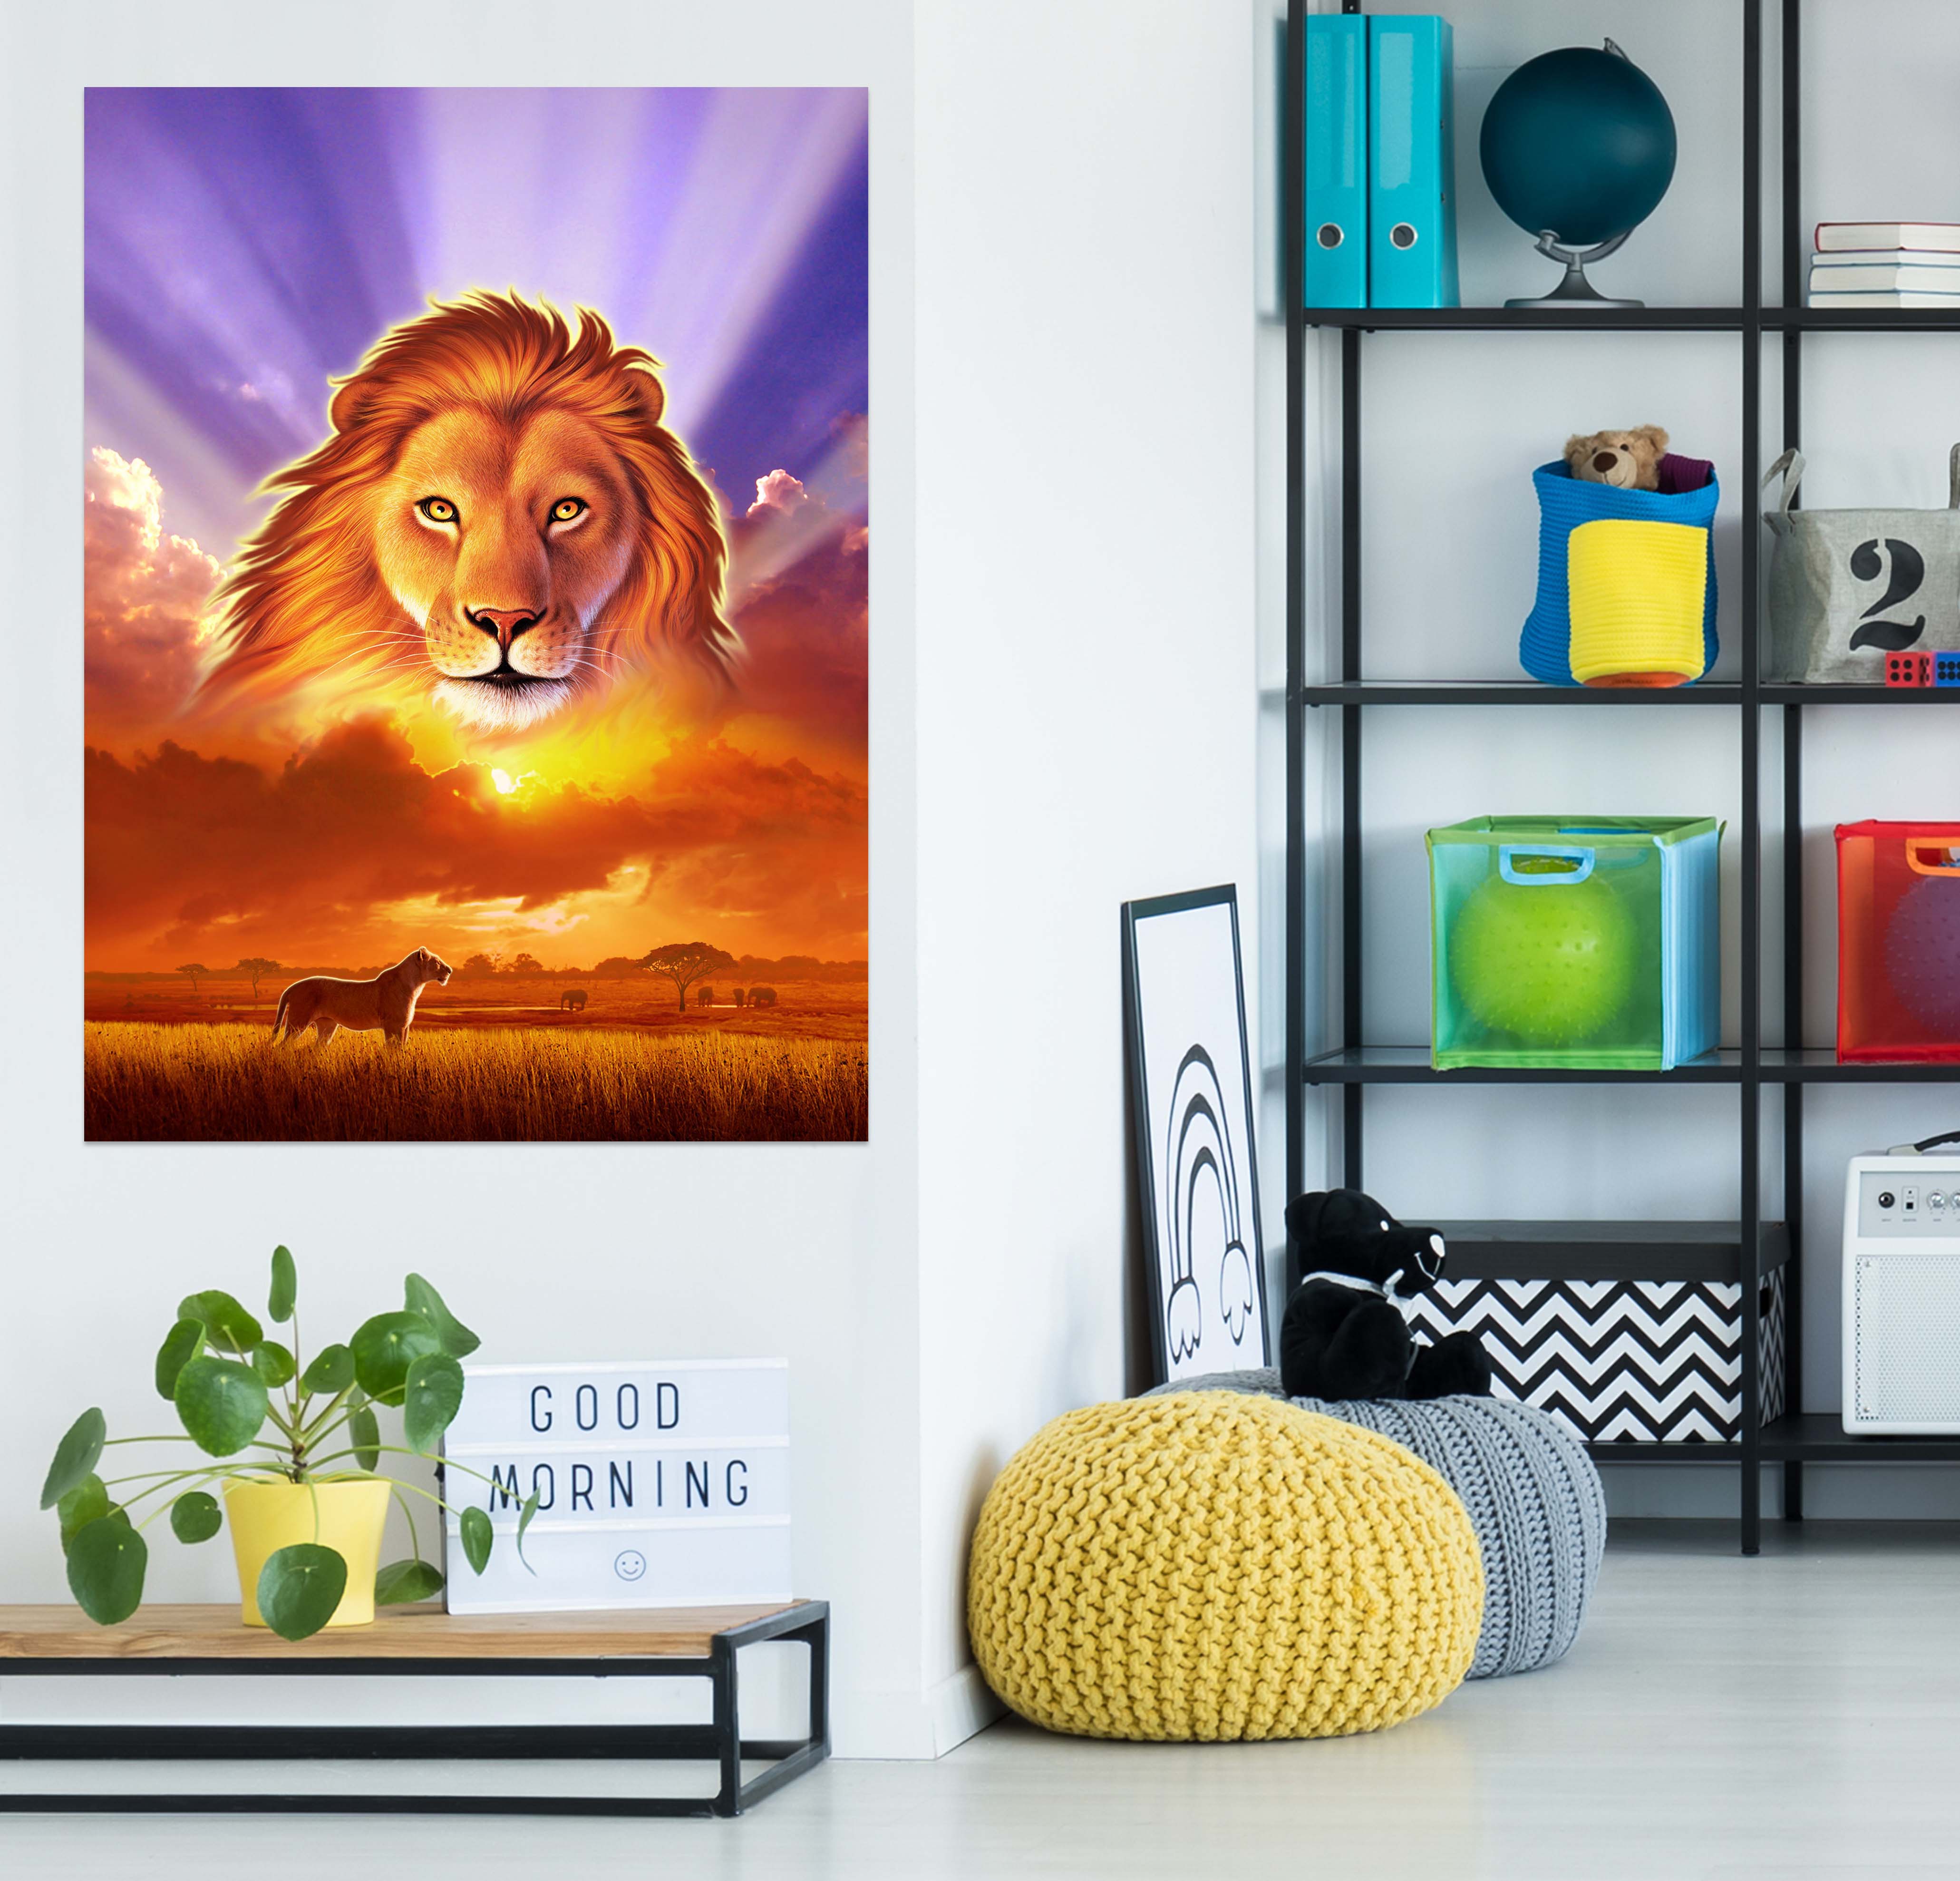 3D Lion King 016 Jerry LoFaro Wall Sticker